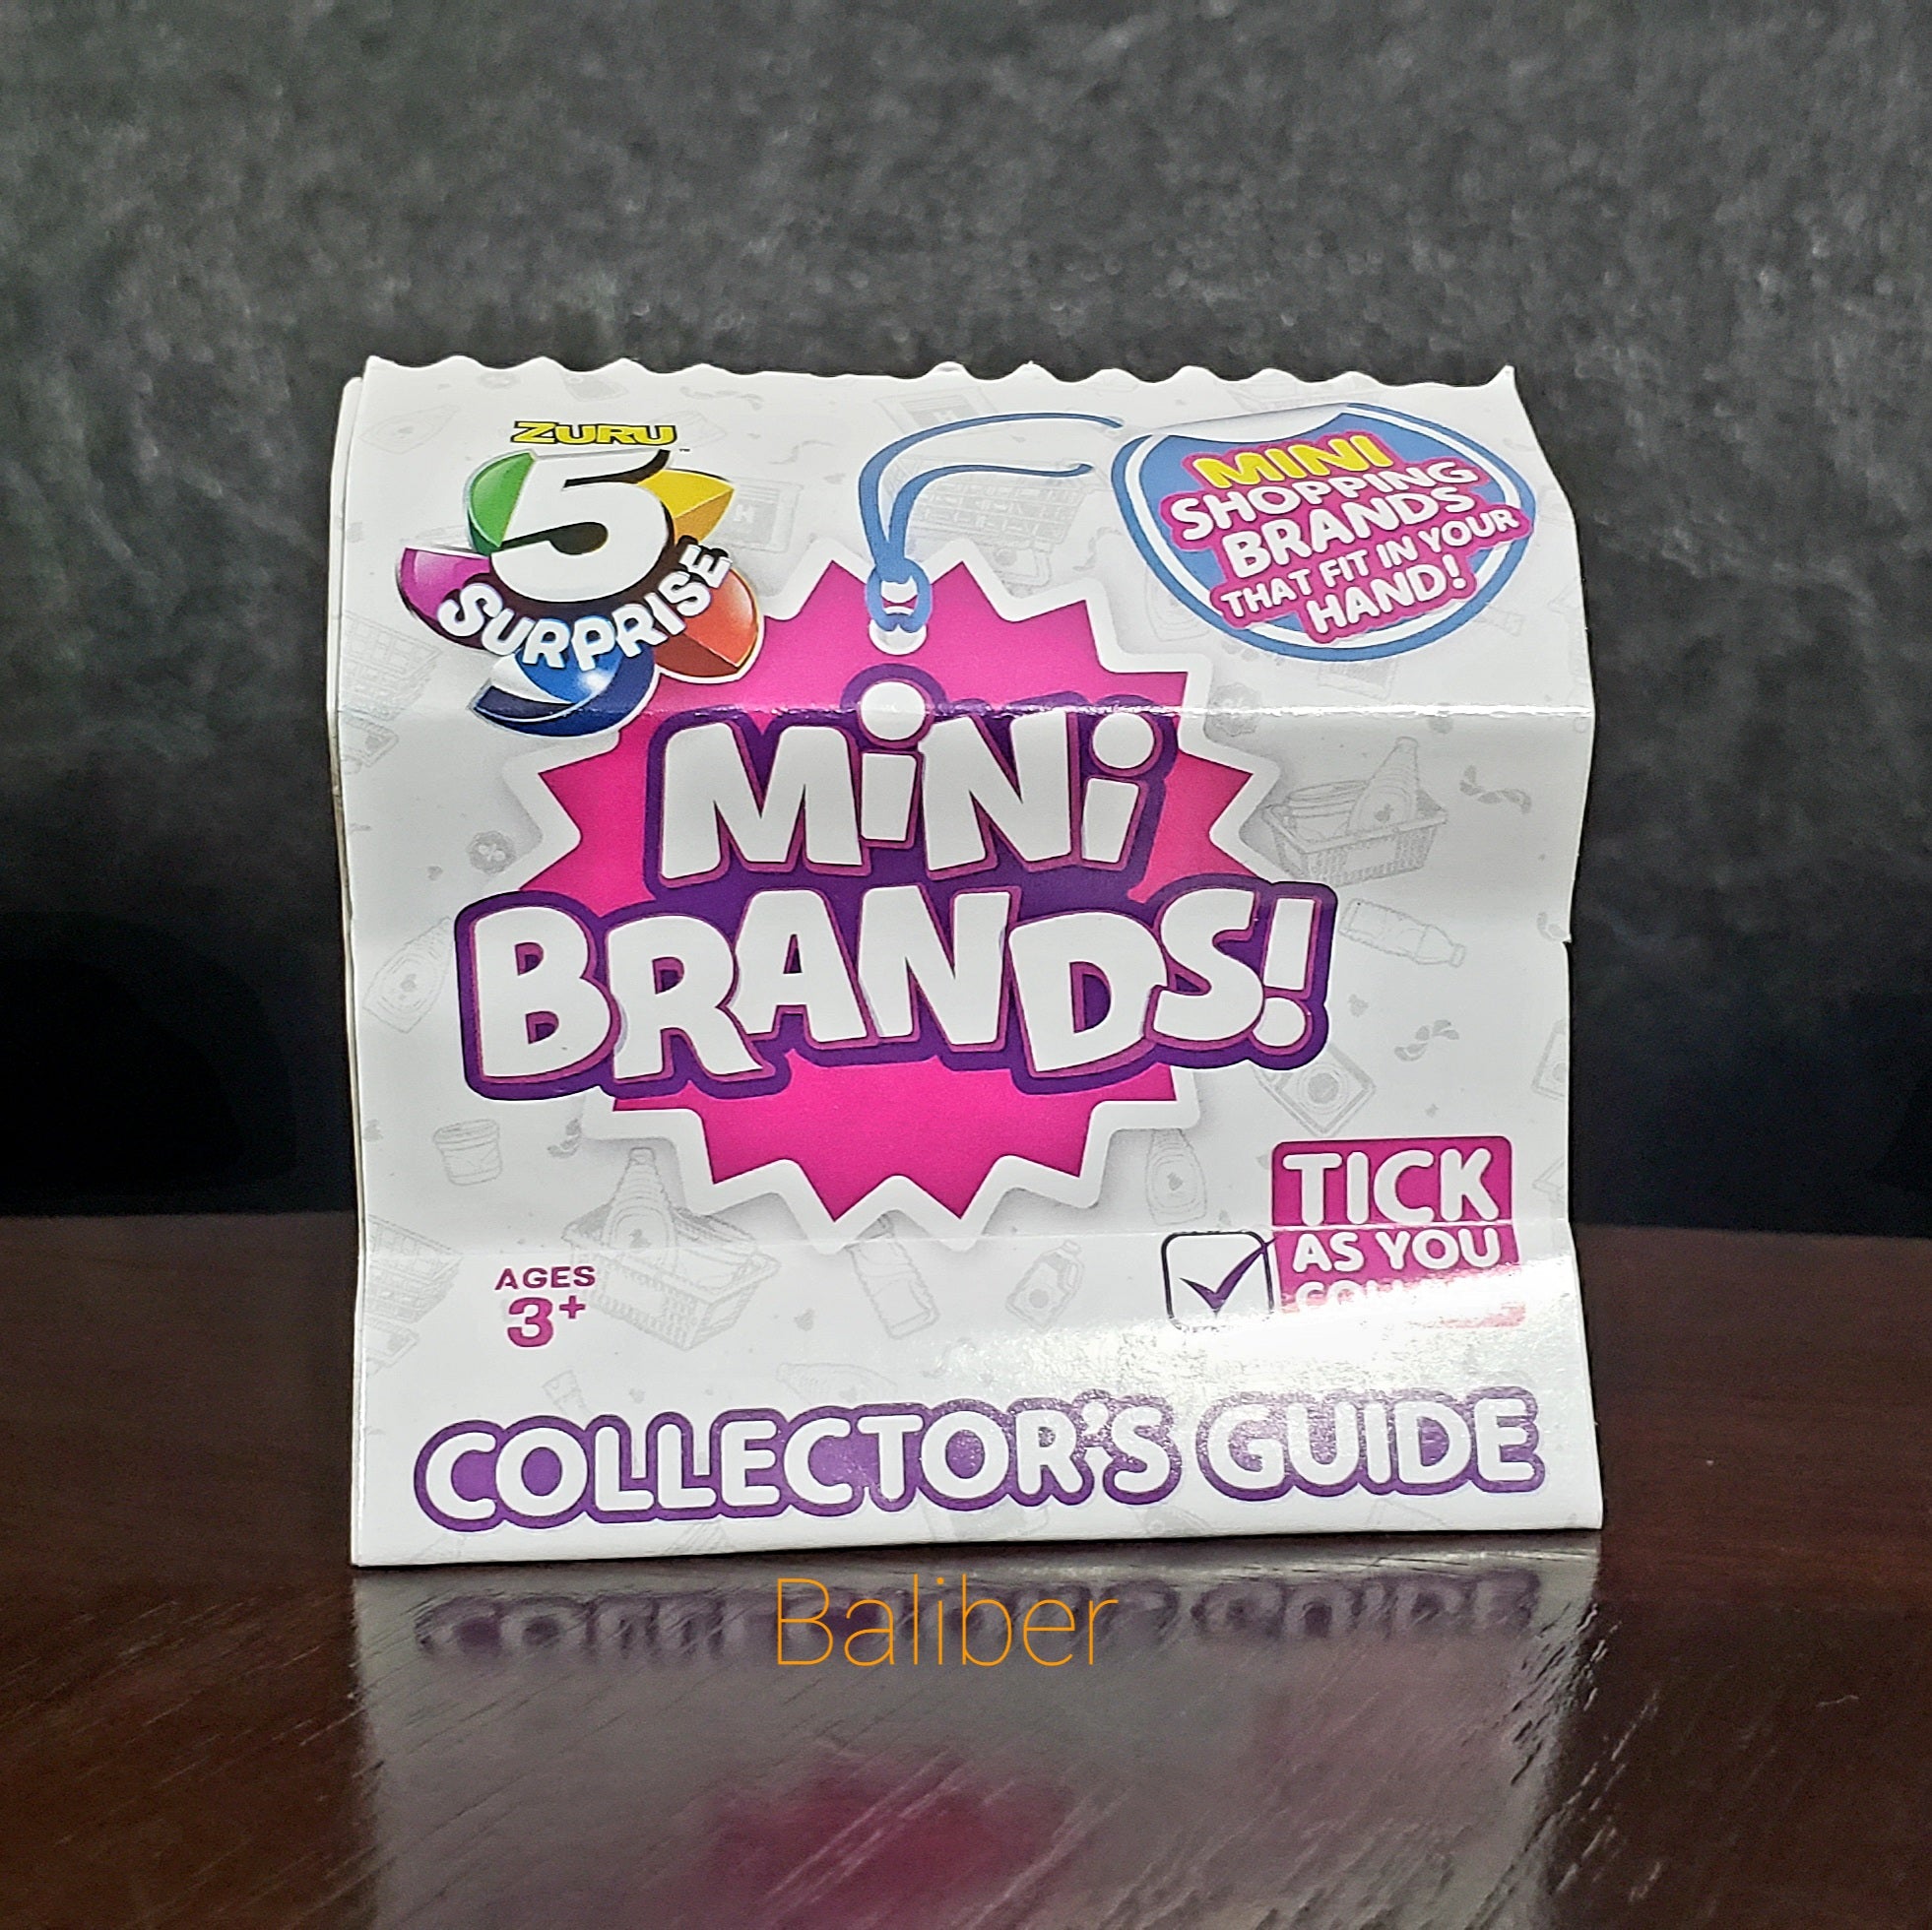 5 Surprise Mini Brands!